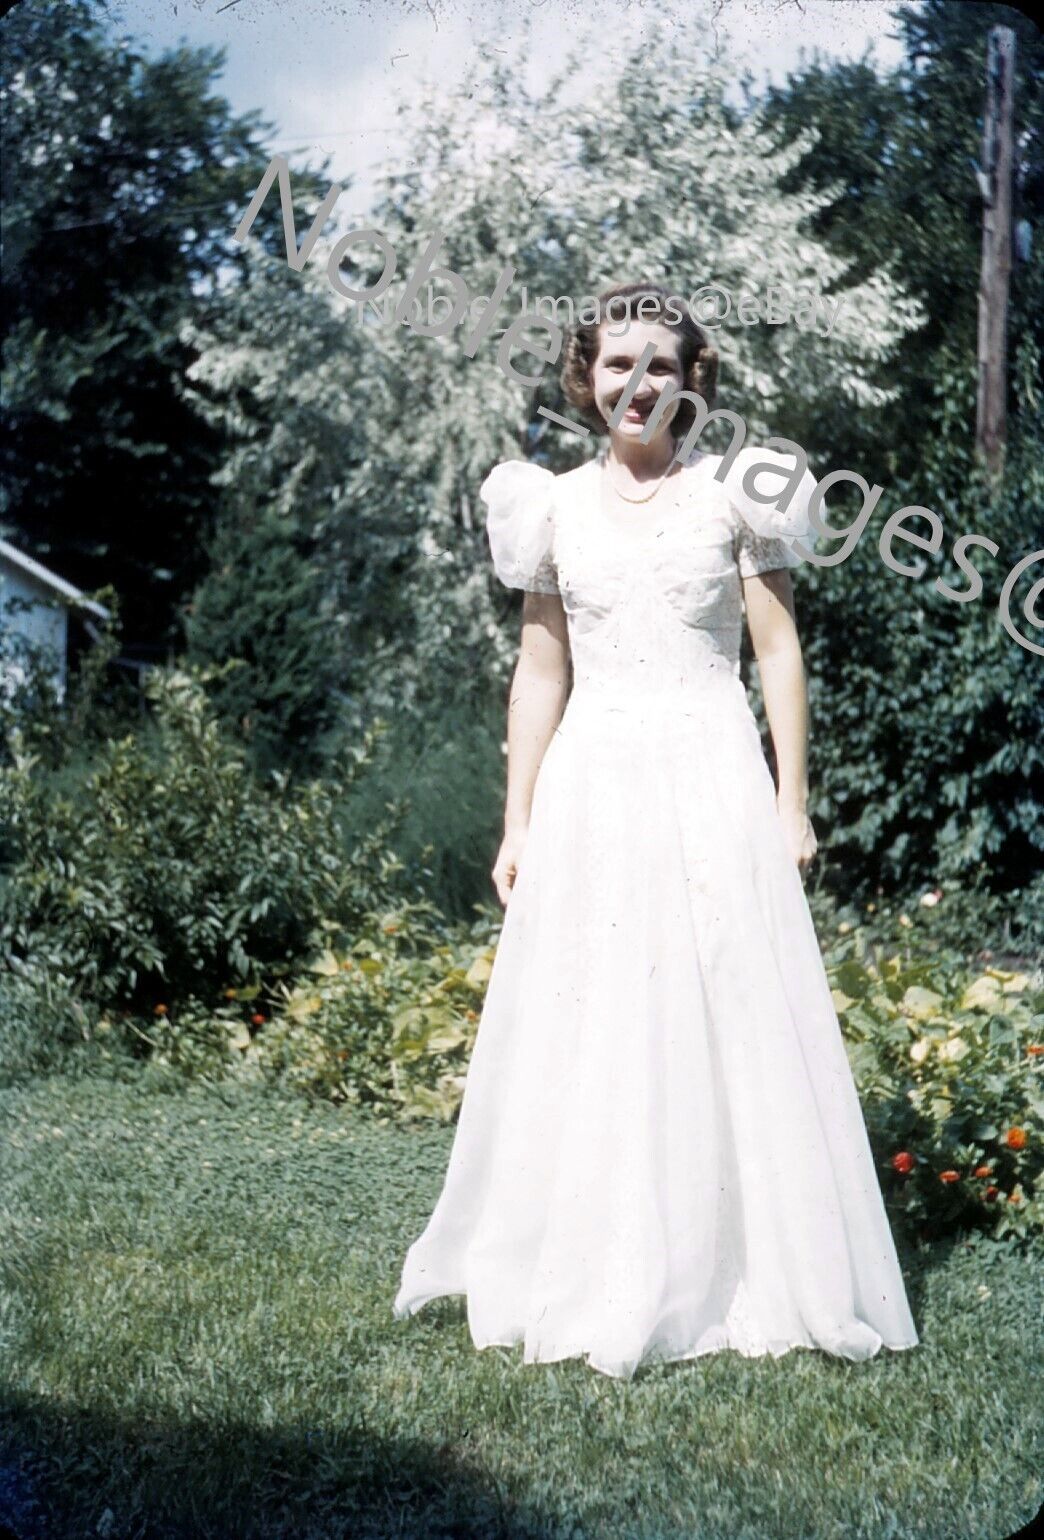 1949 Pretty Bride with Pearls Outdoors Manhattan KS Red-Border Kodachrome Slide